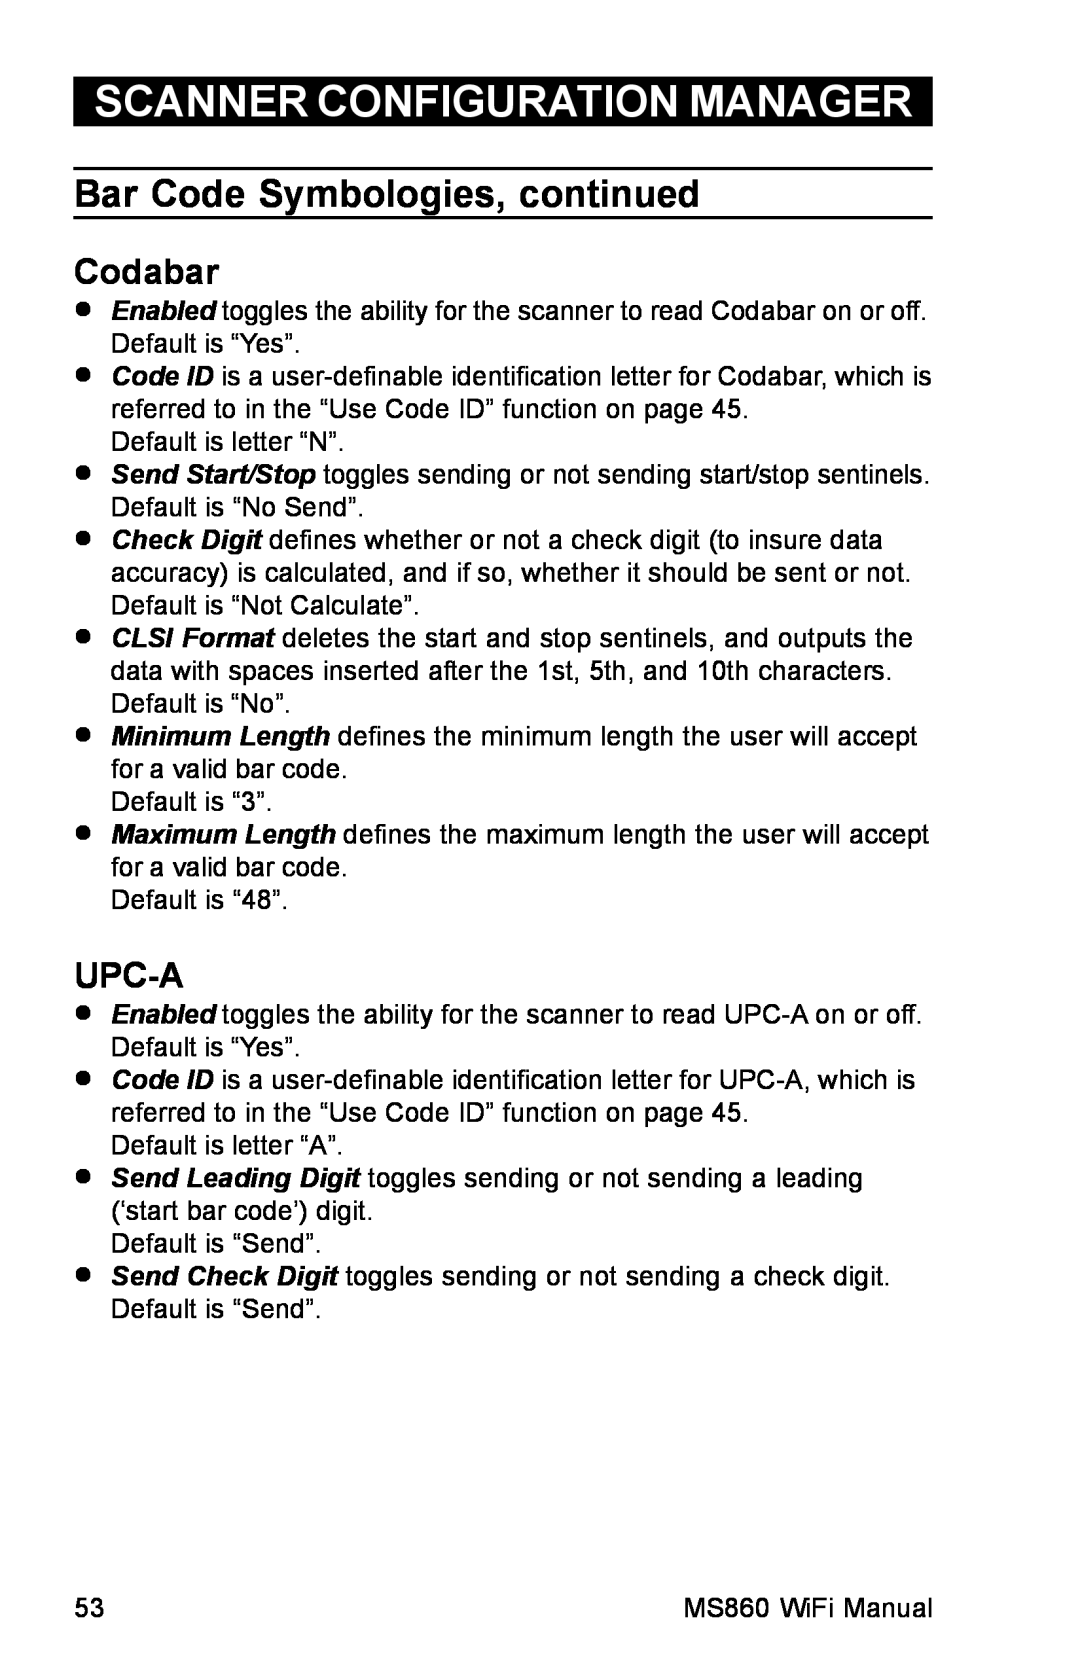 Unitech MS860 manual Codabar, Upc-A, Scanner Configuration Manager, Bar Code Symbologies, continued 